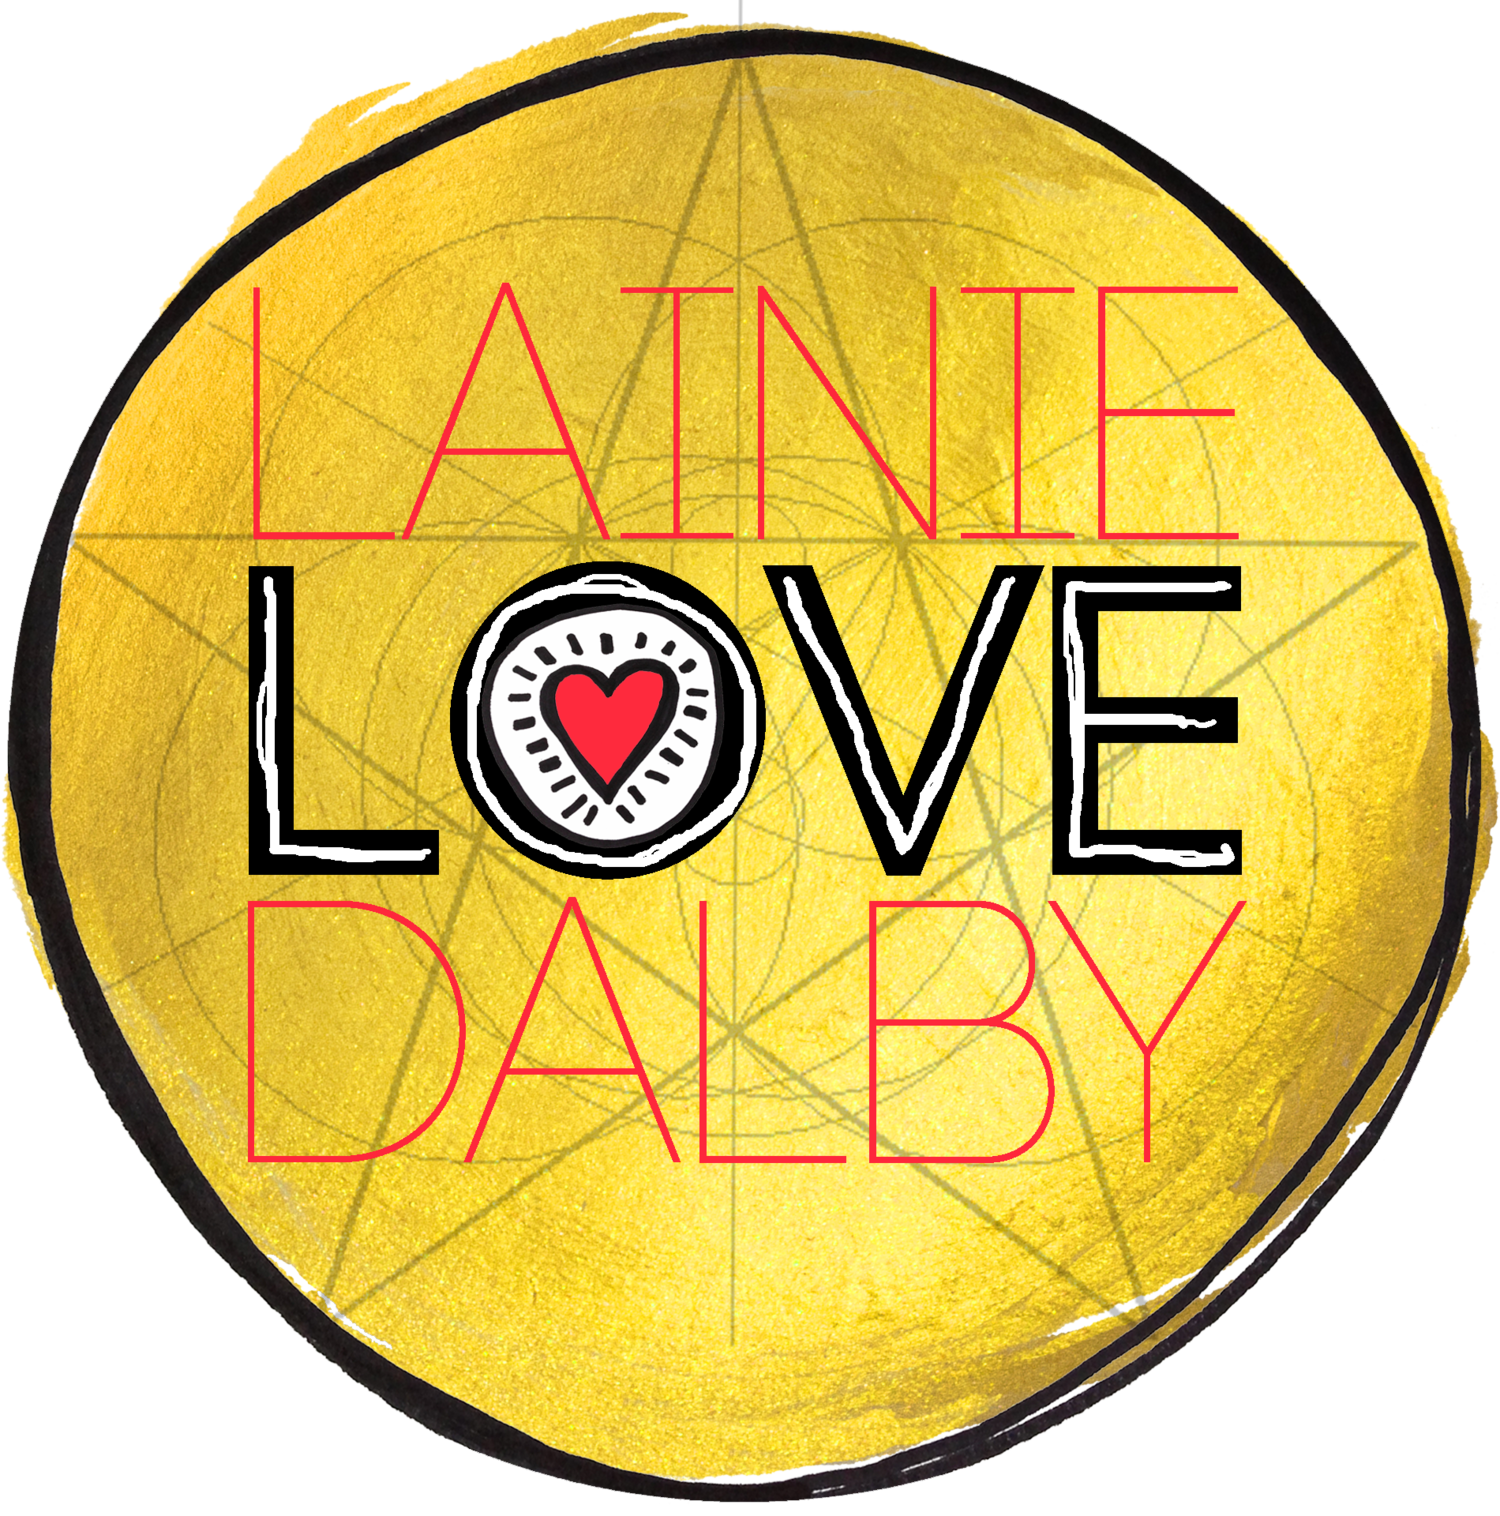 Embodied Spiritual & Leadership Development with Lainie Love Dalby